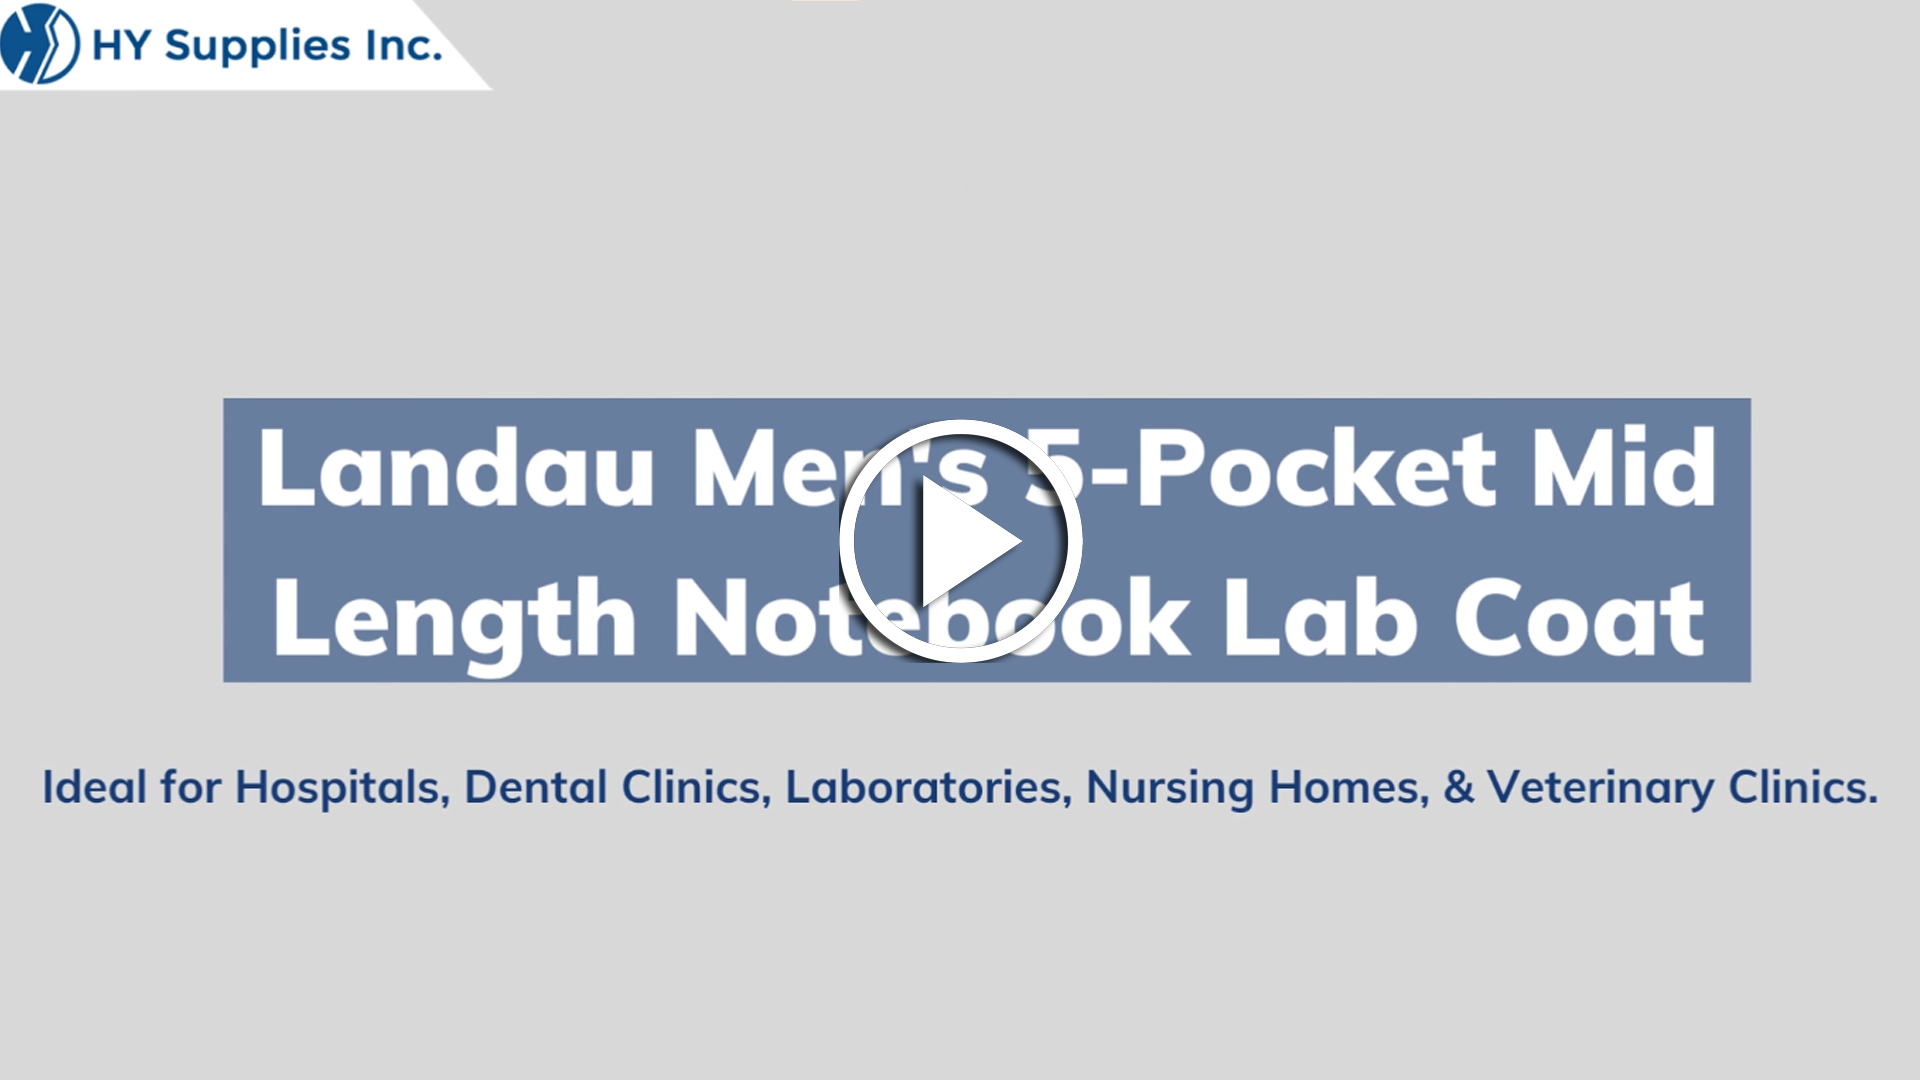 Landau Men's 5-Pocket Mid-Length Notebook Lab Coat